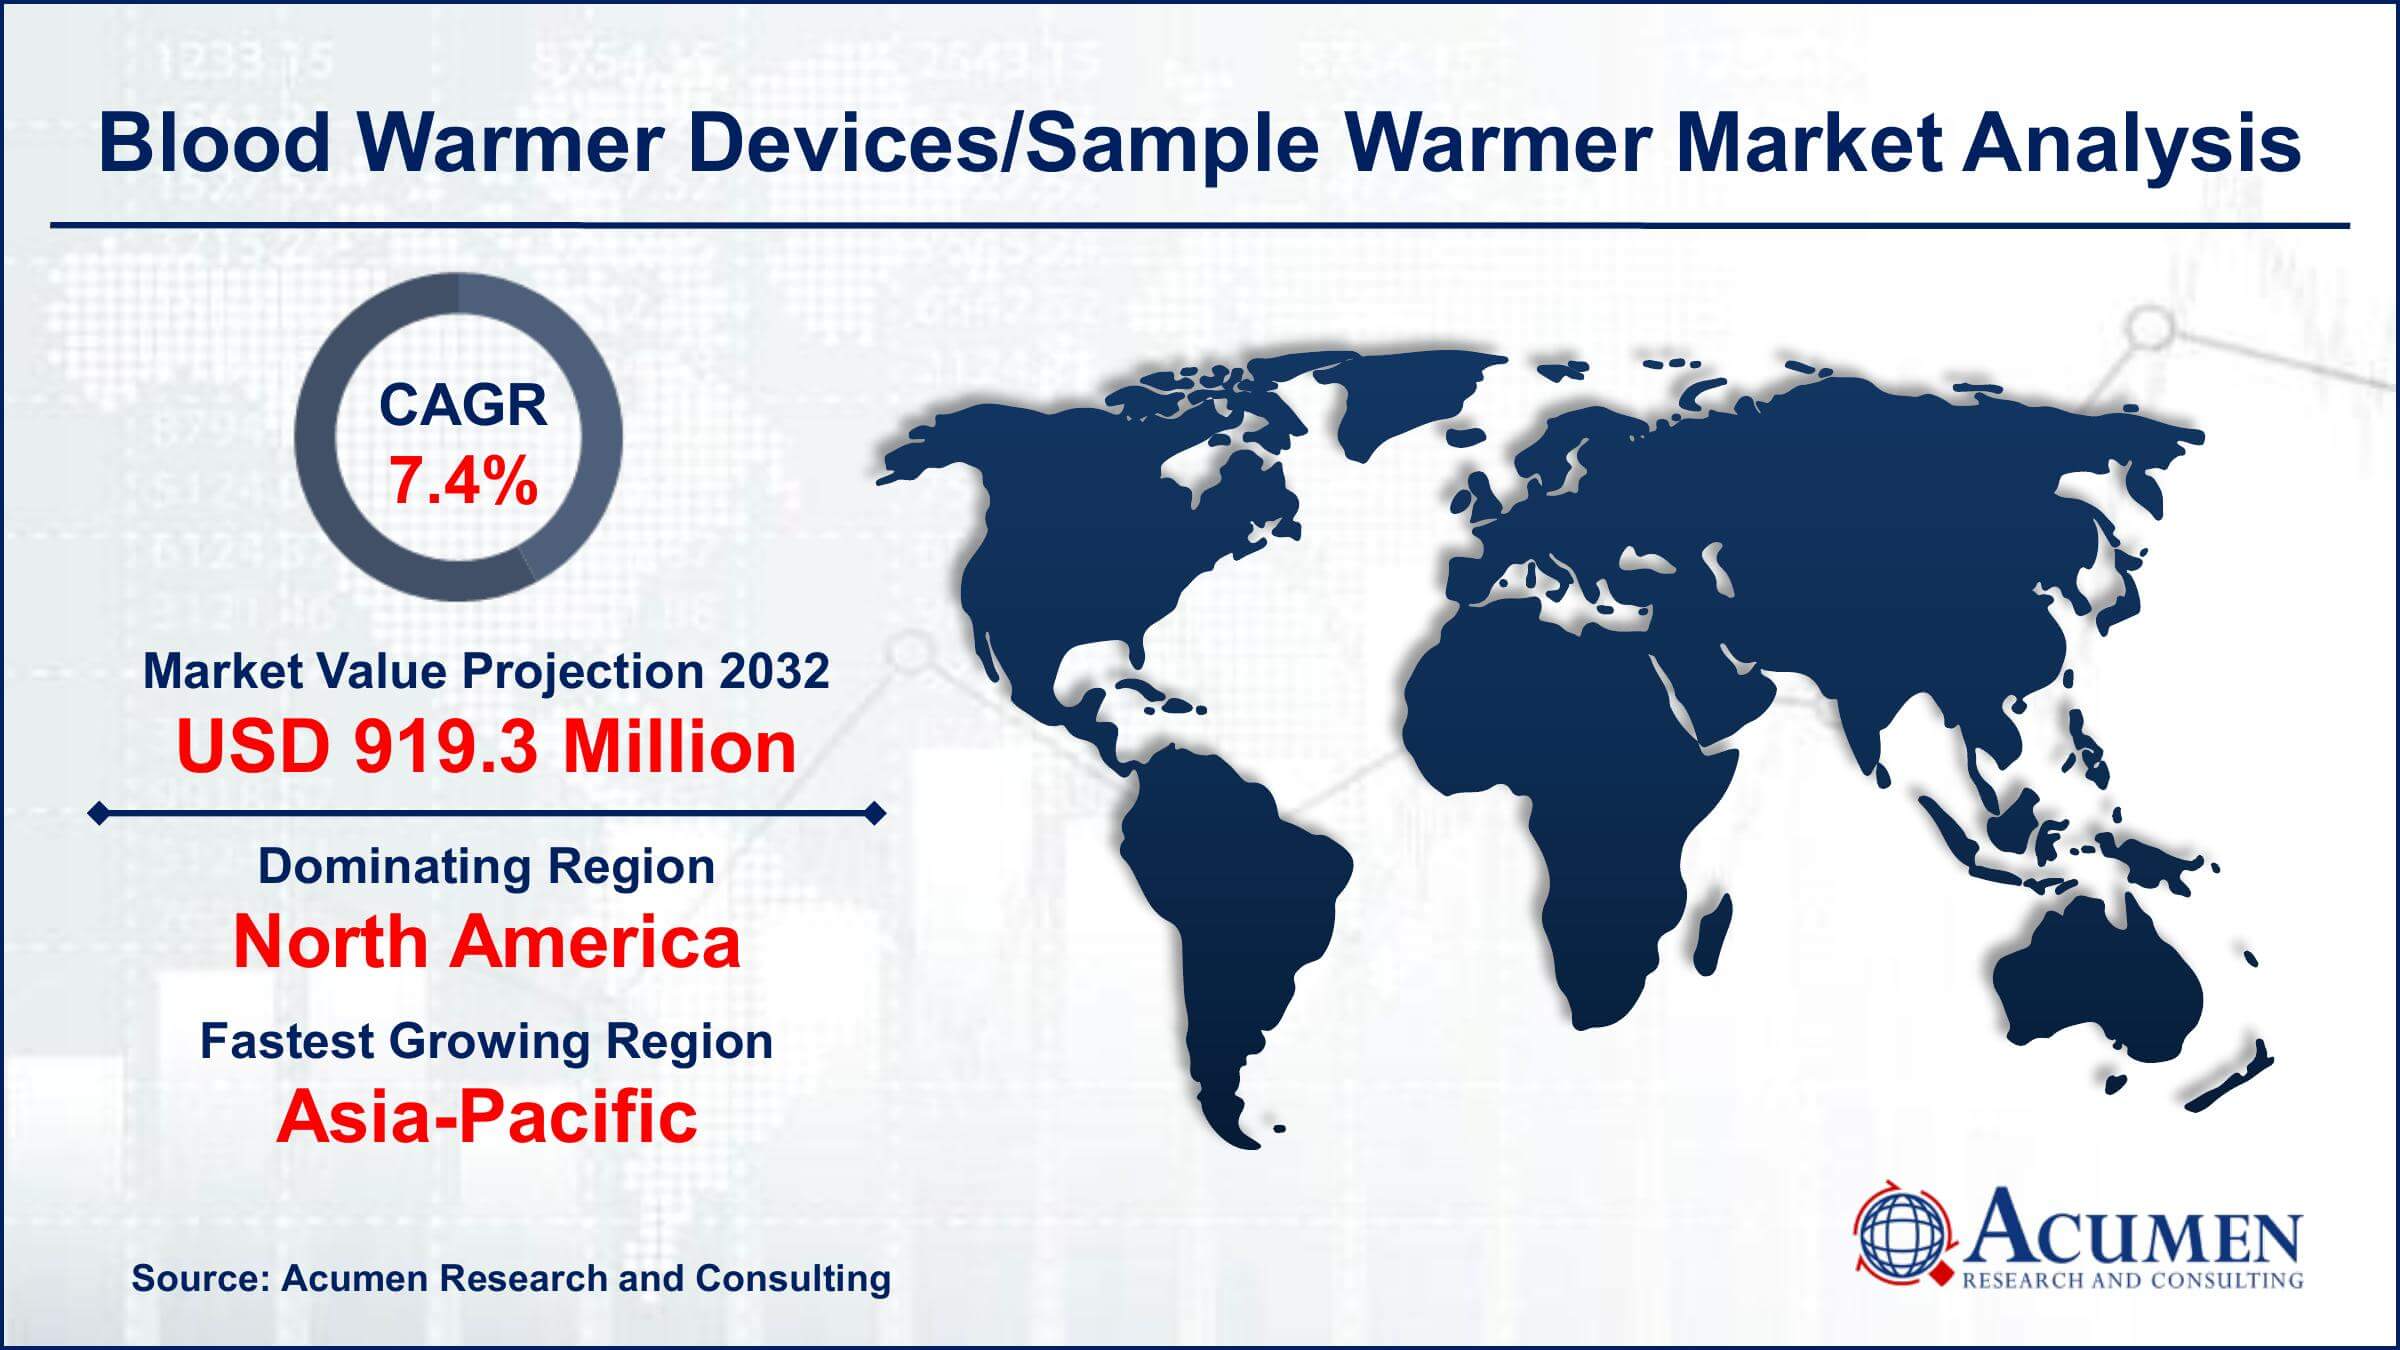 Global Blood Warmer Devices/Sample Warmer Market Trends